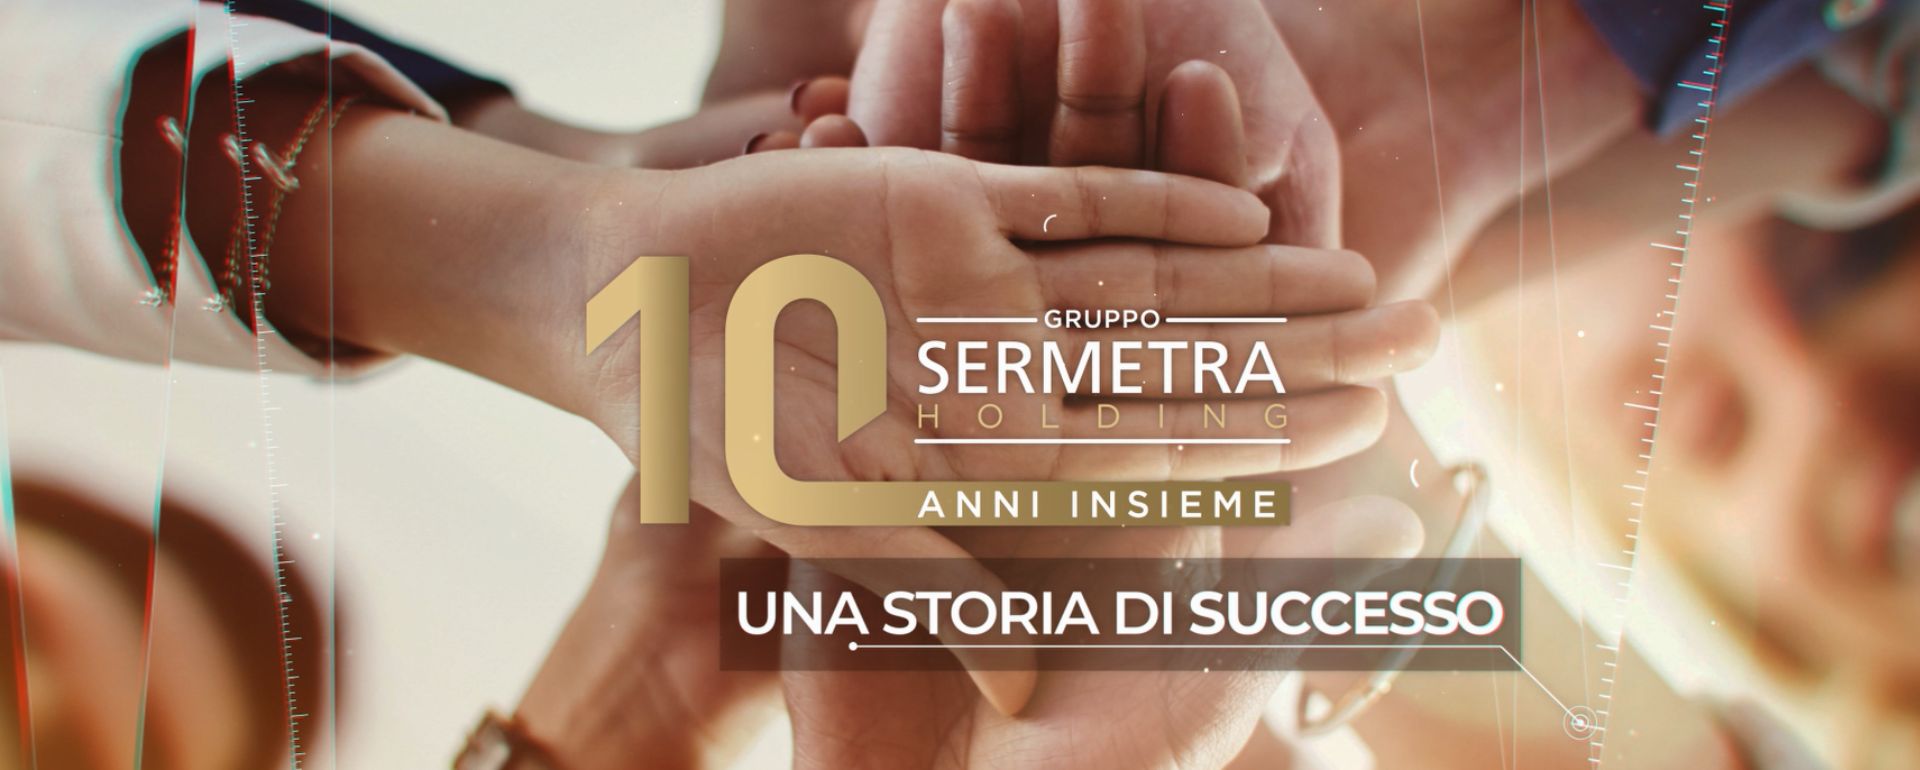 Video Sermetra Holding: 10 anni insieme